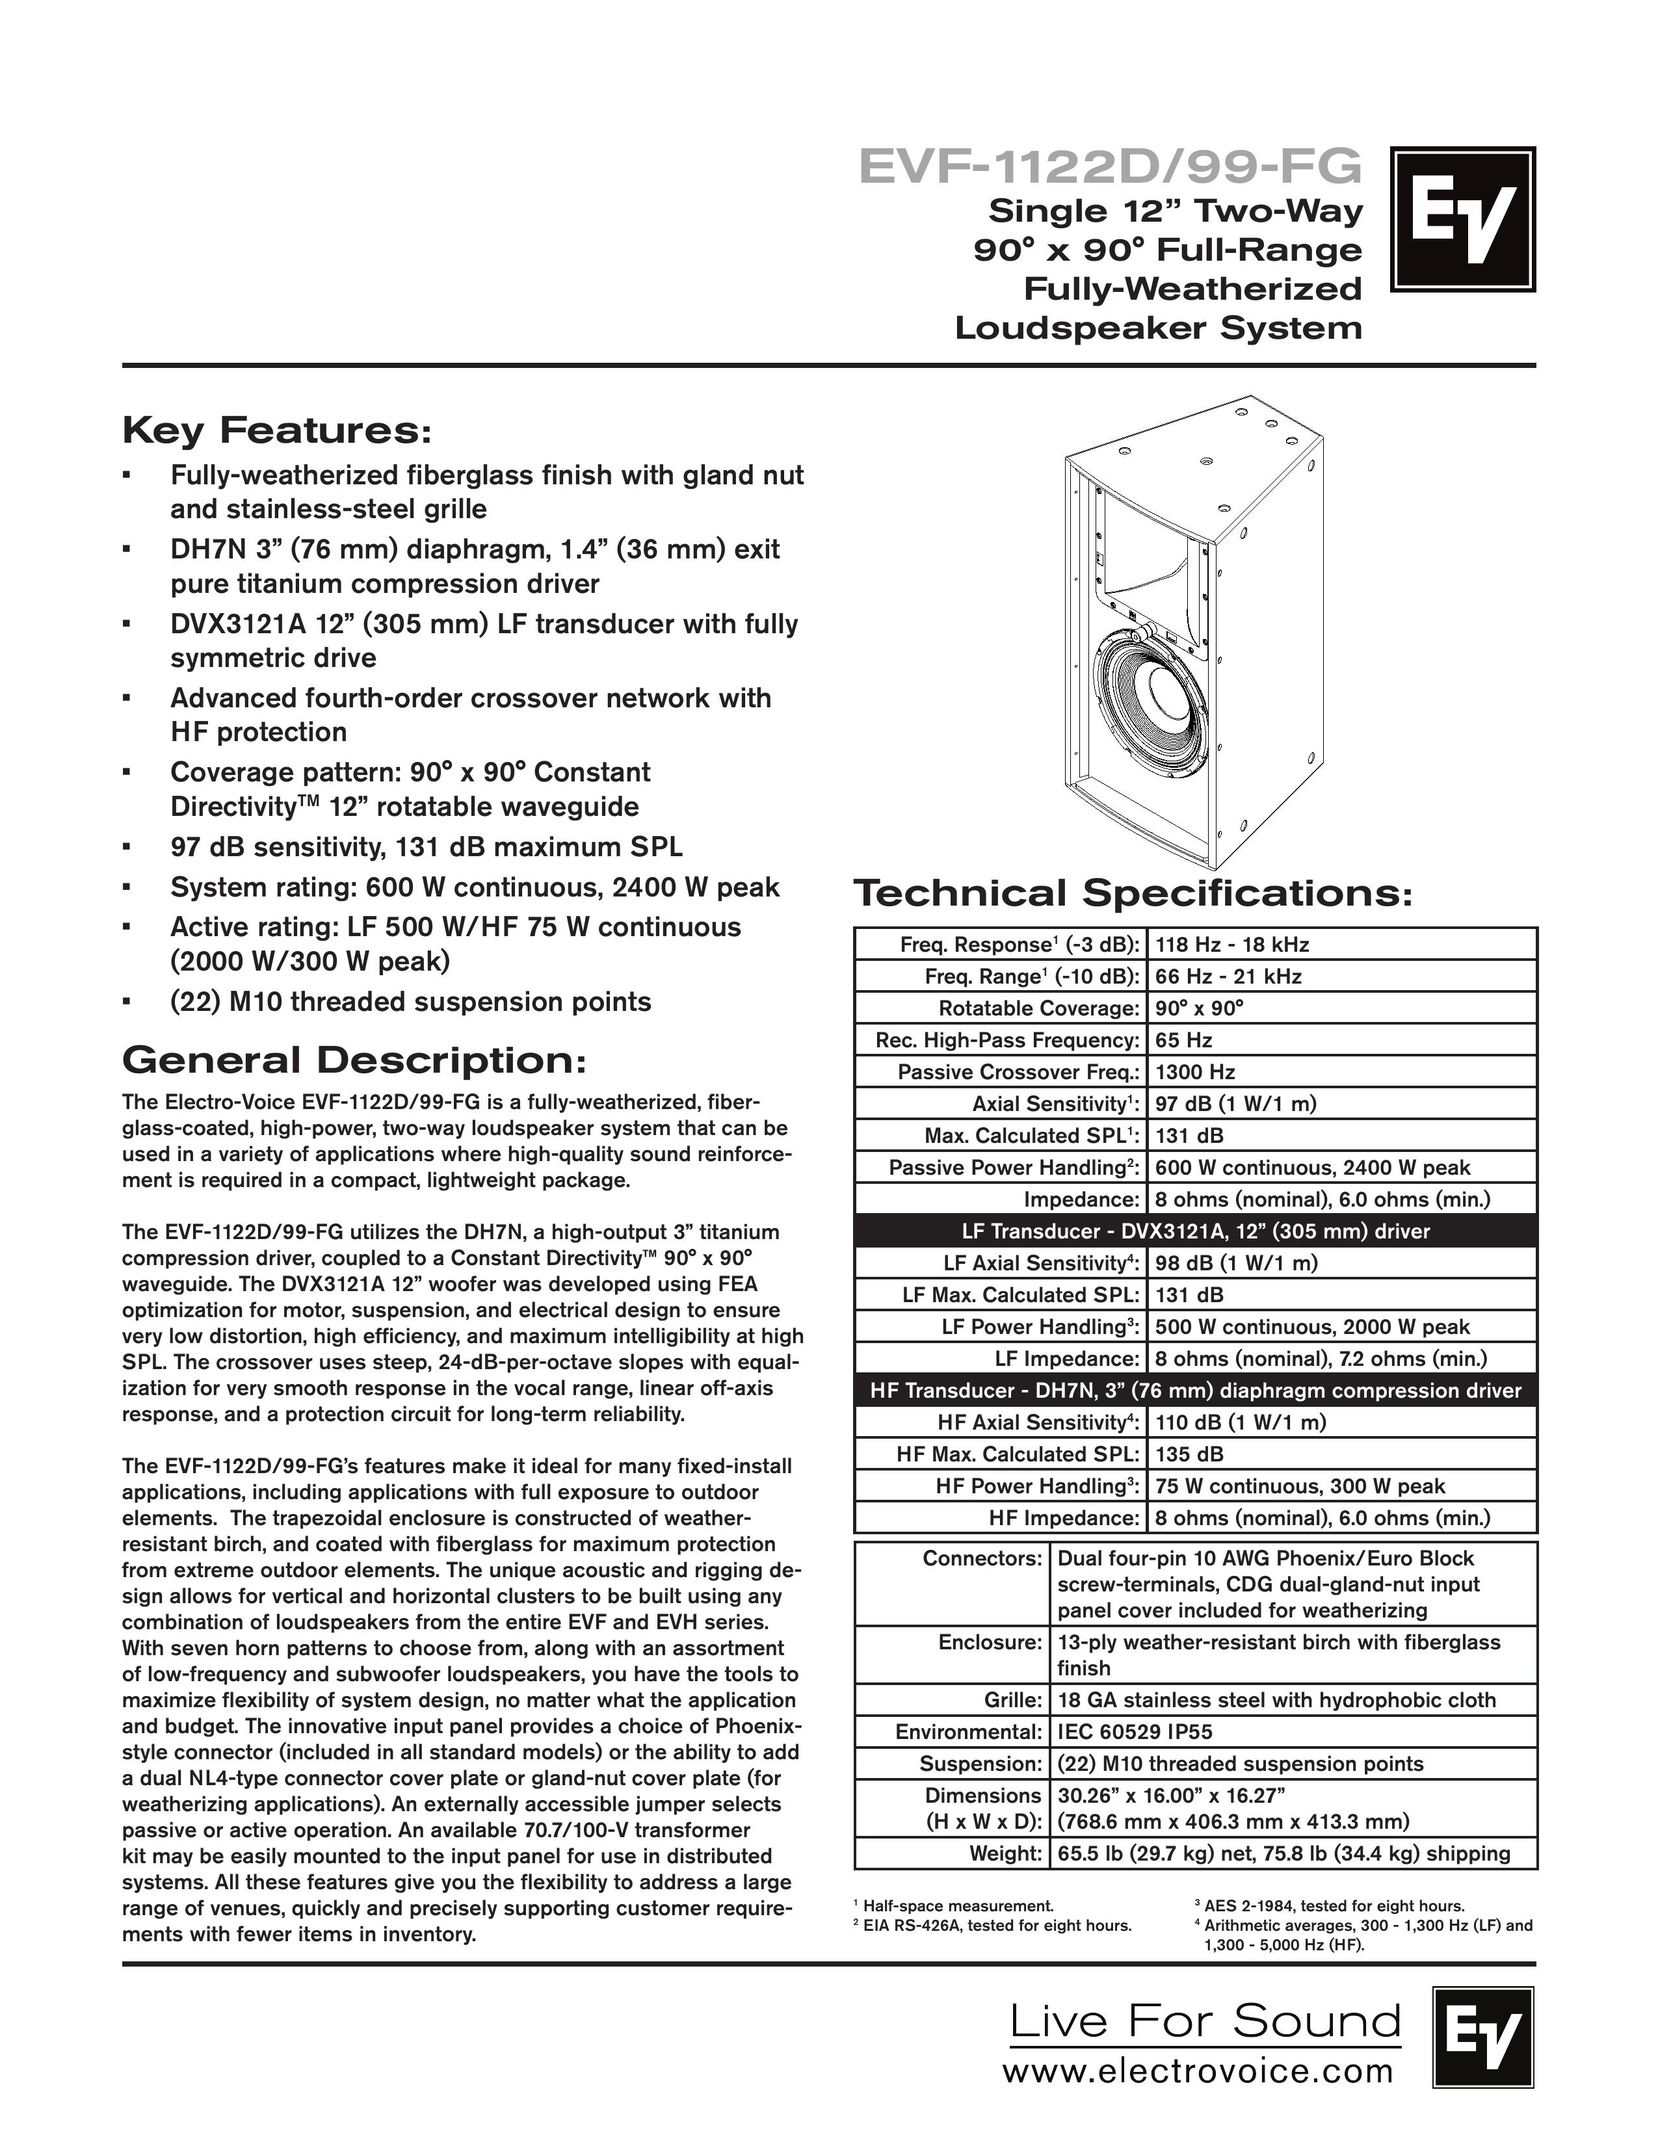 Electro-Voice EVF-1122D/99-FG Speaker User Manual